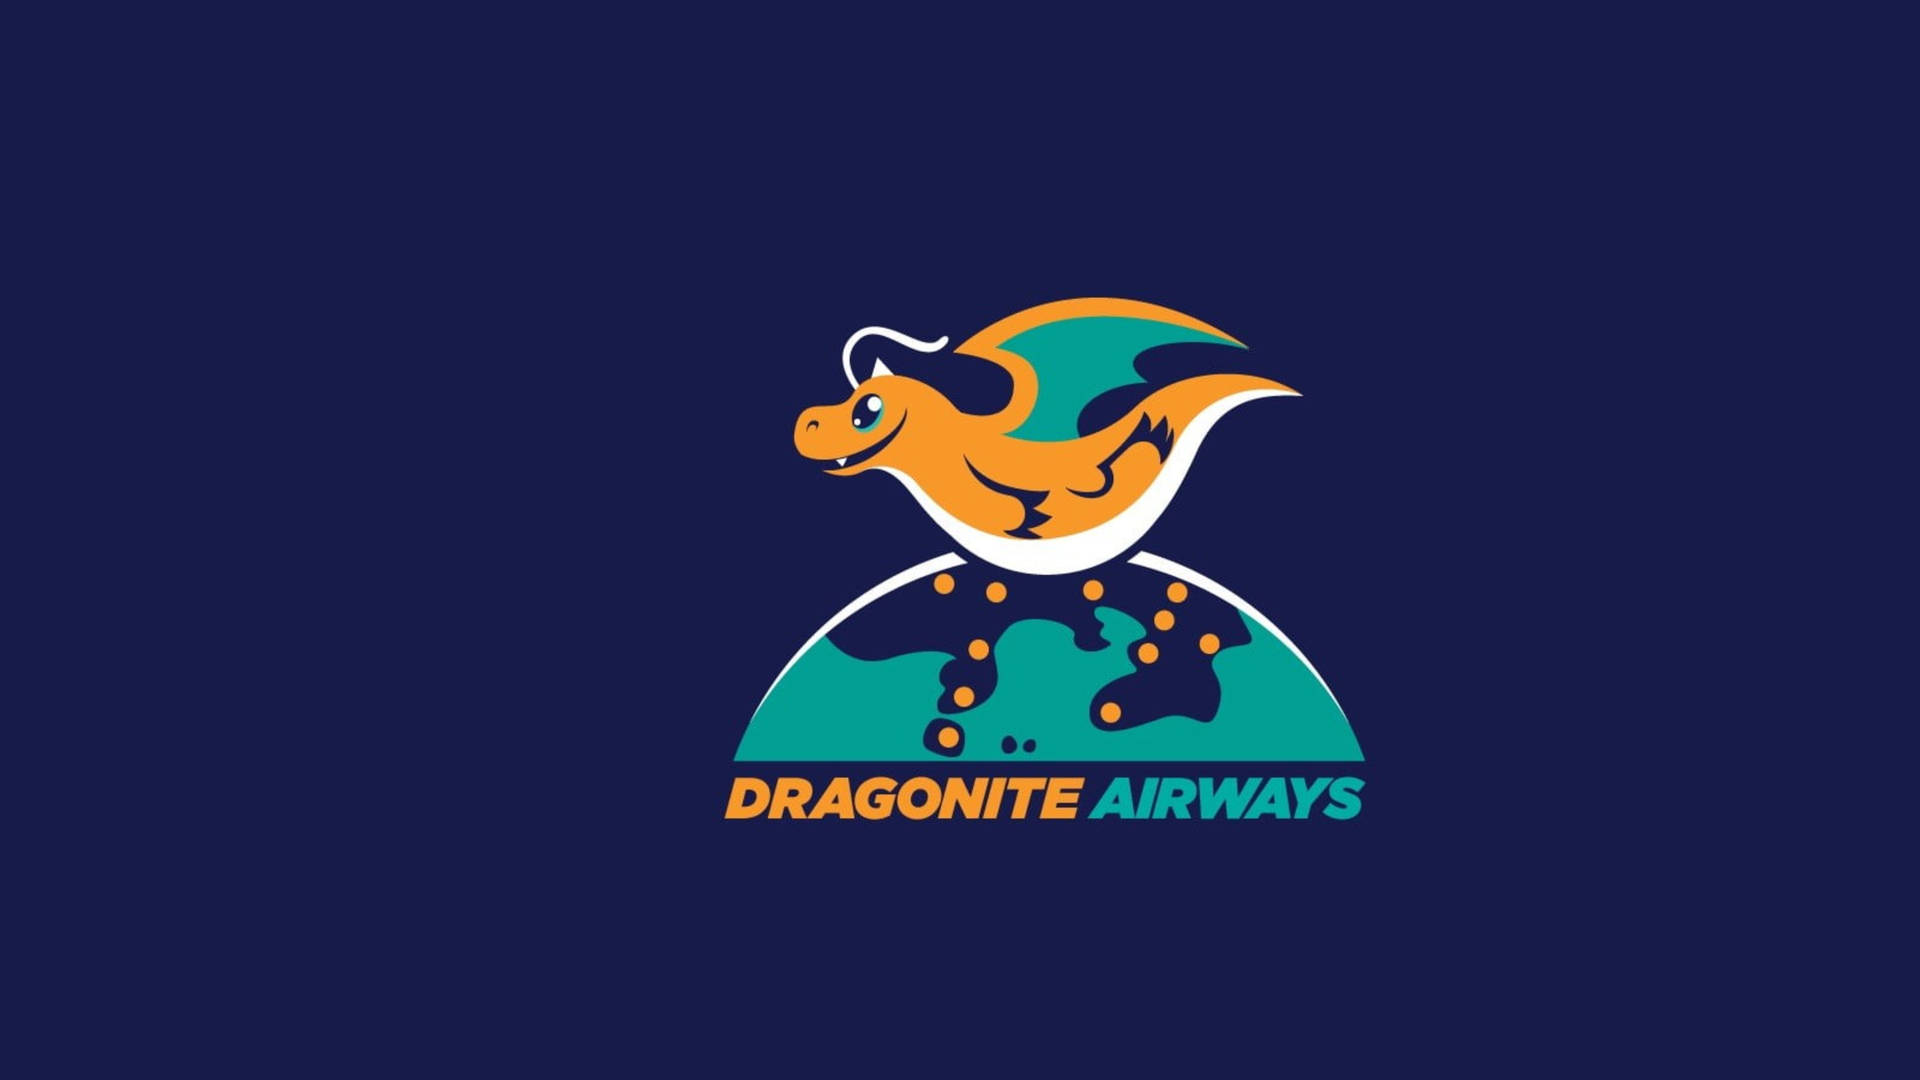 Dragonite Airways Wallpaper